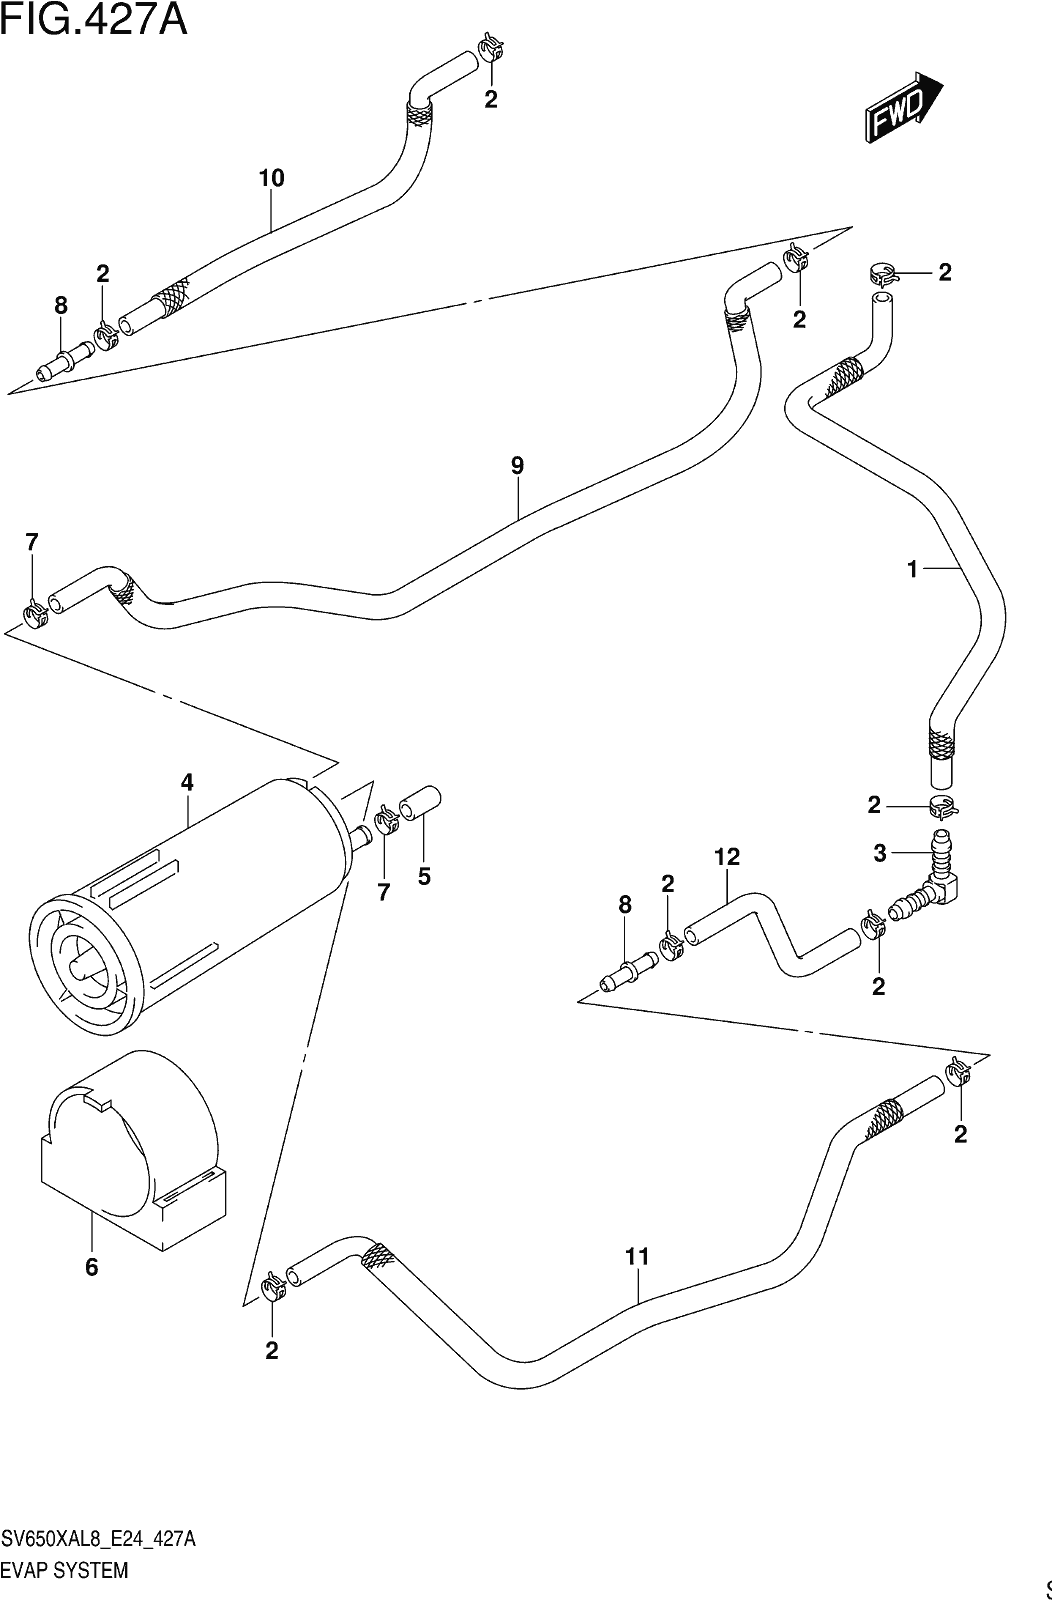 Fig.427a Evap System